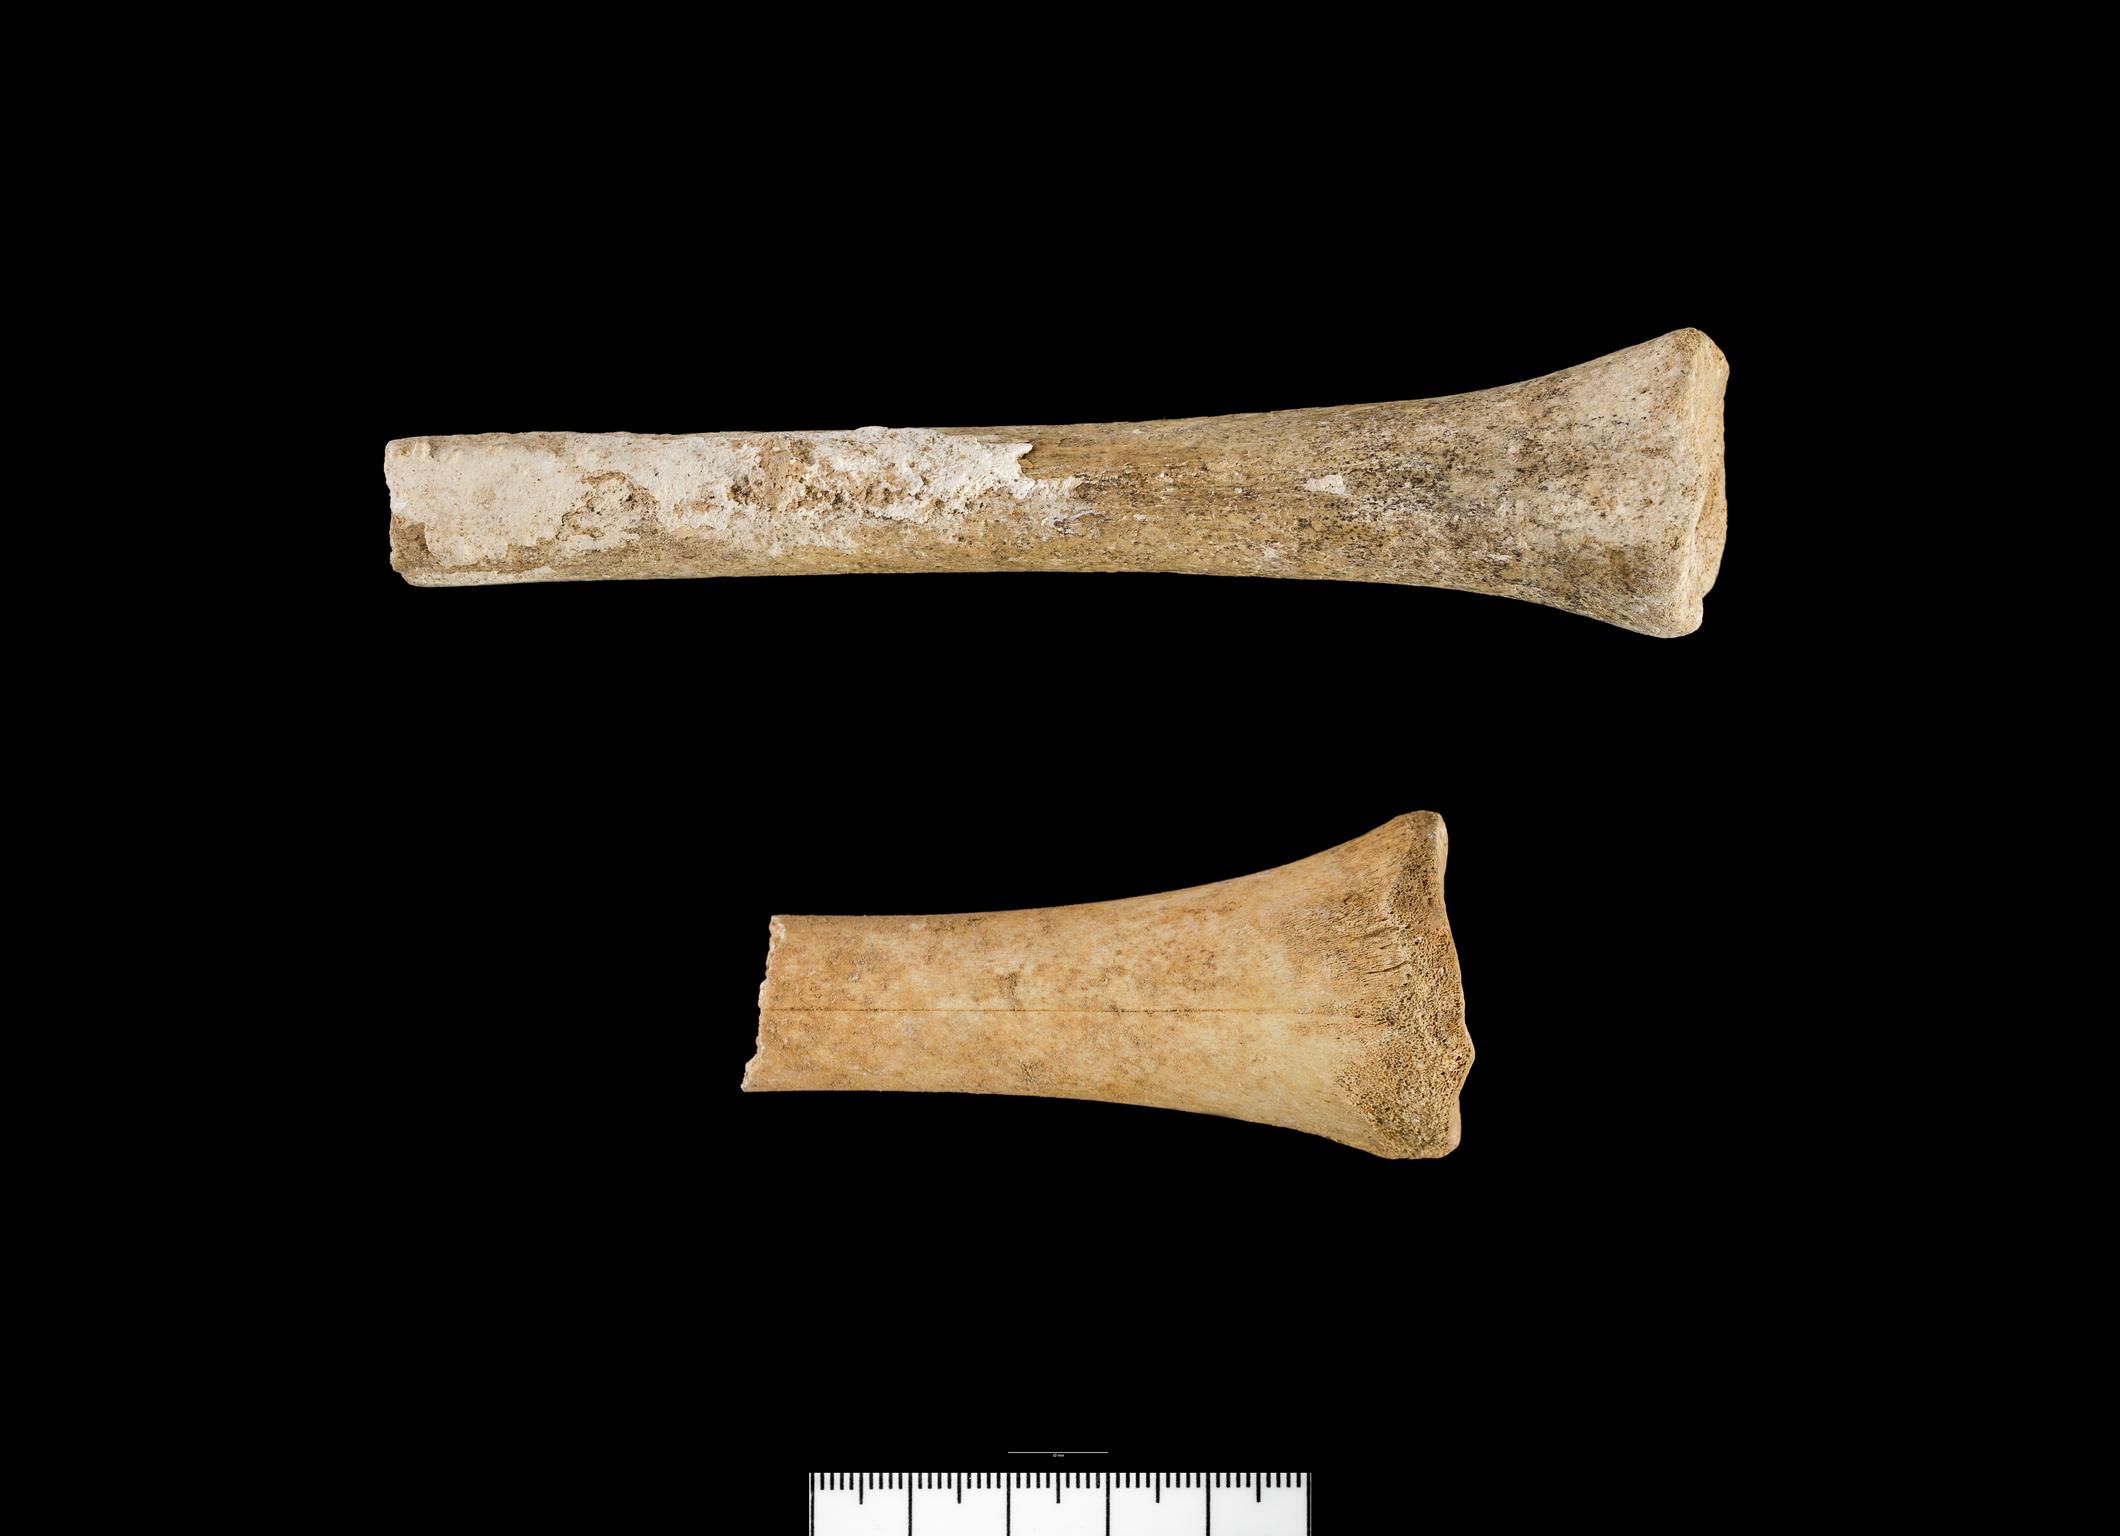 Holocene animal bone